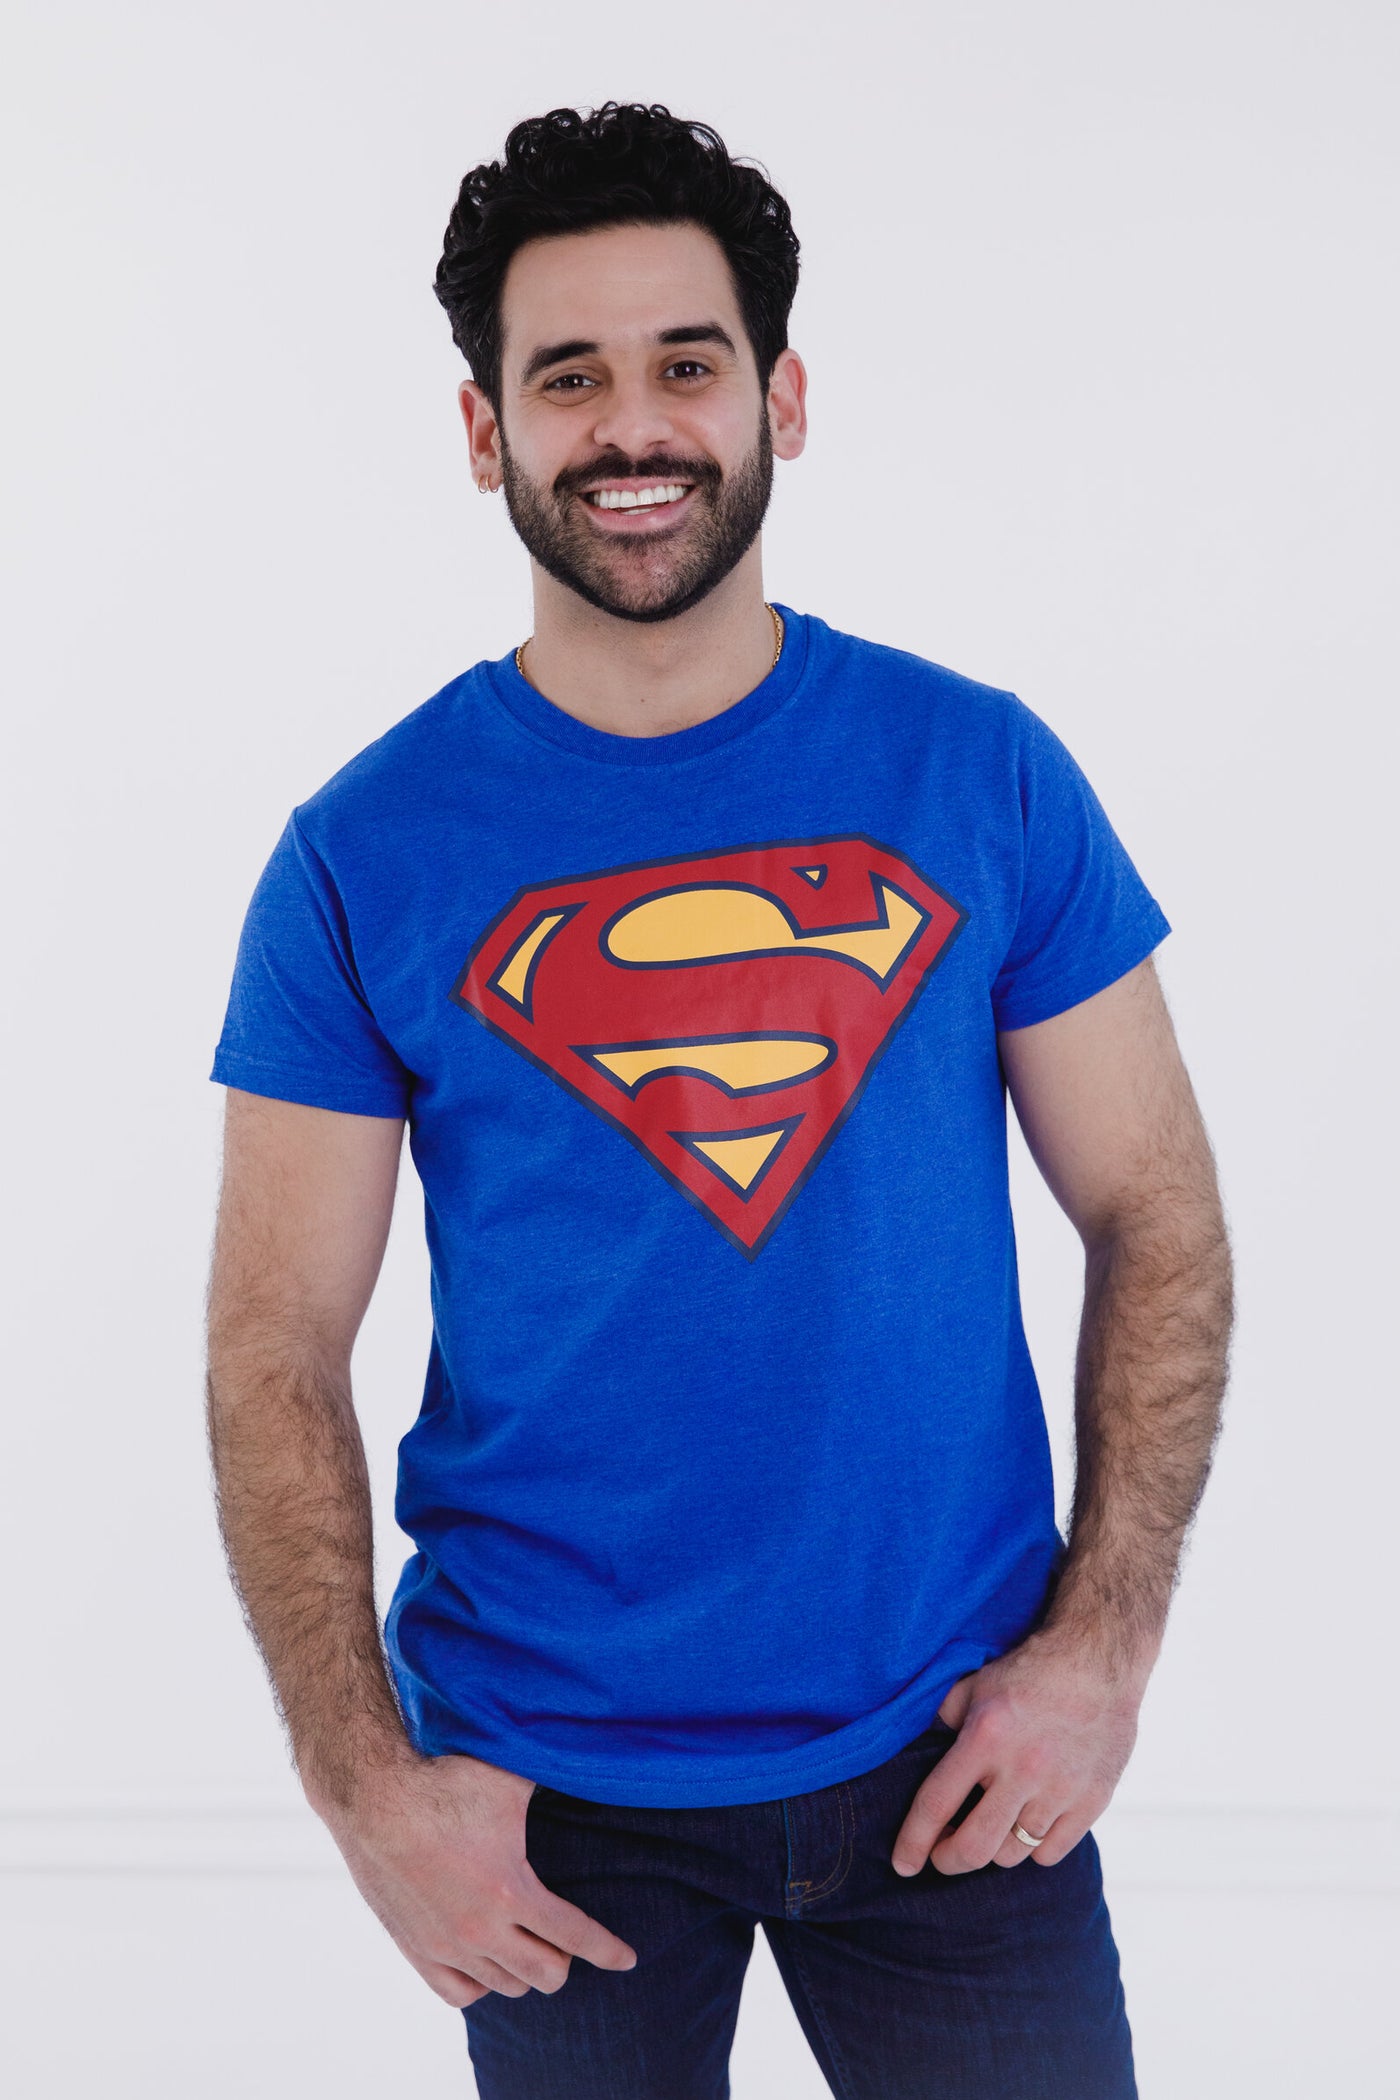 DC Comics Justice League Superman T-Shirt